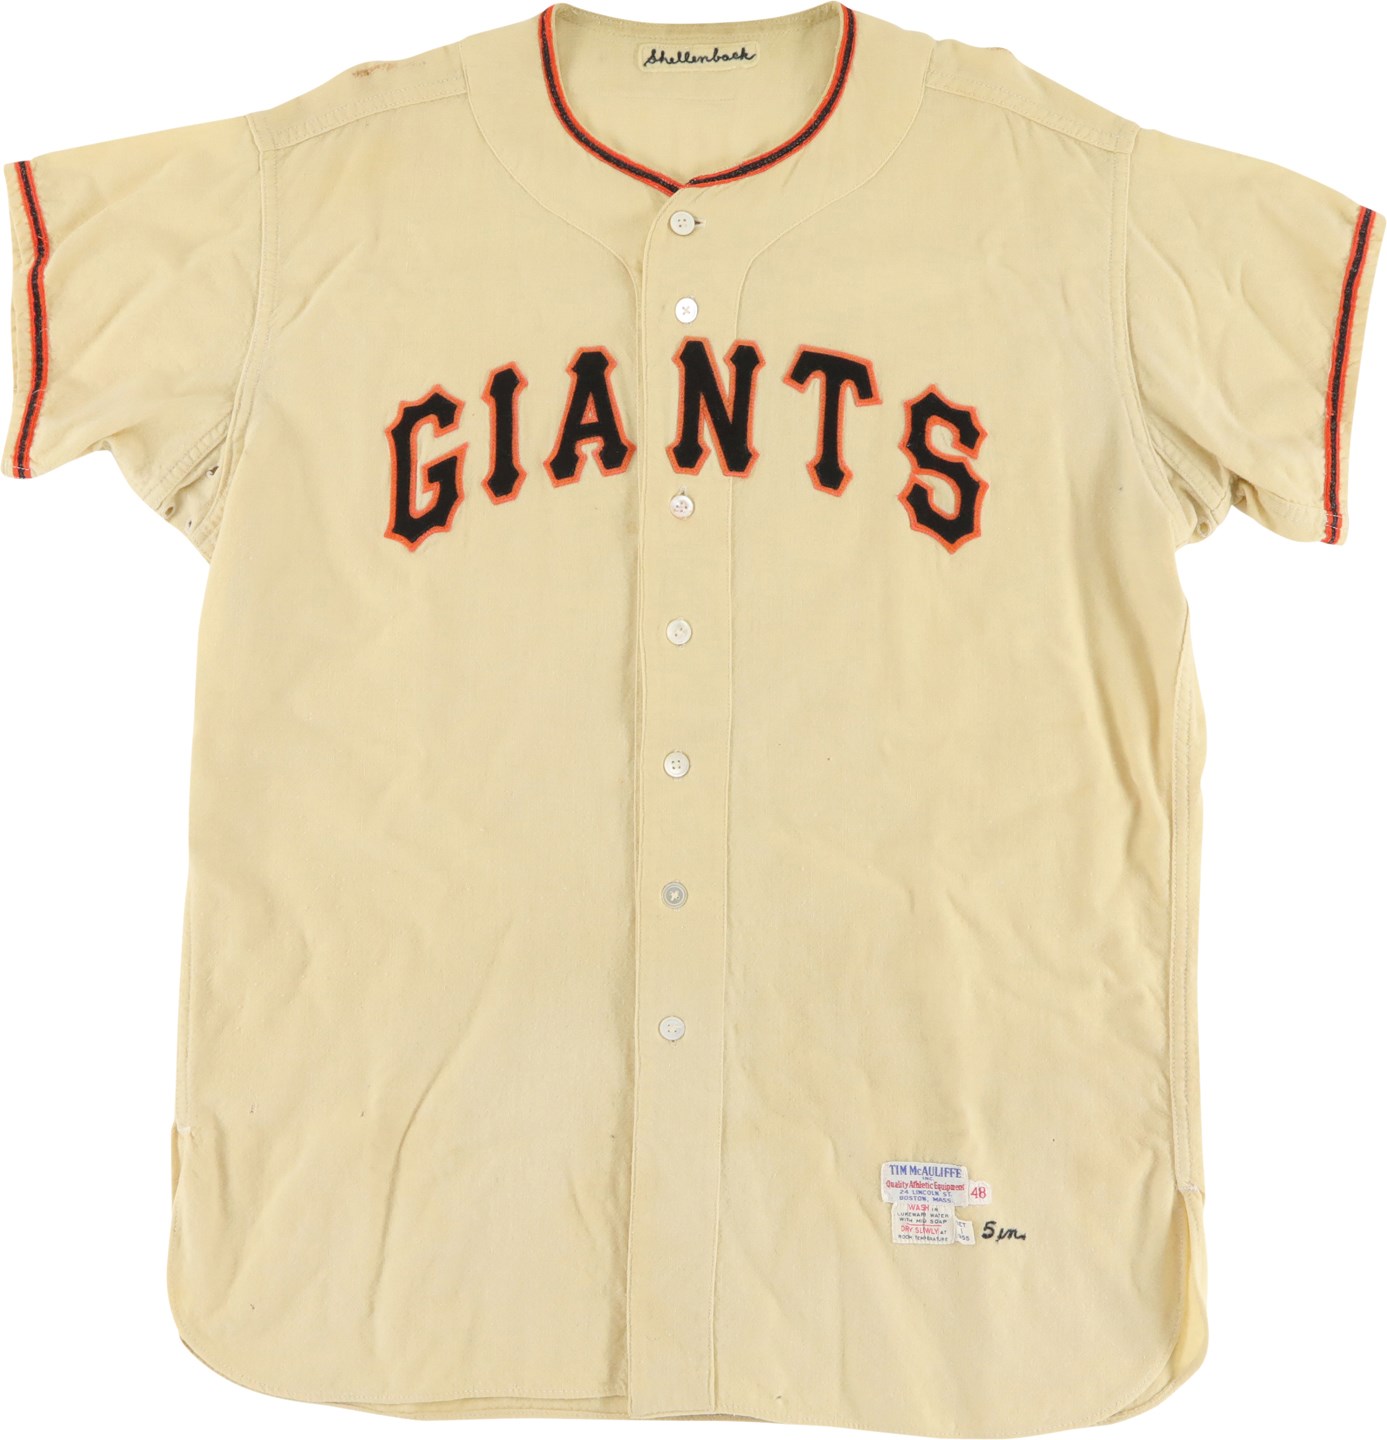 Baseball Equipment - 1955 Frank Shellenback New York Giants Game Worn Jersey